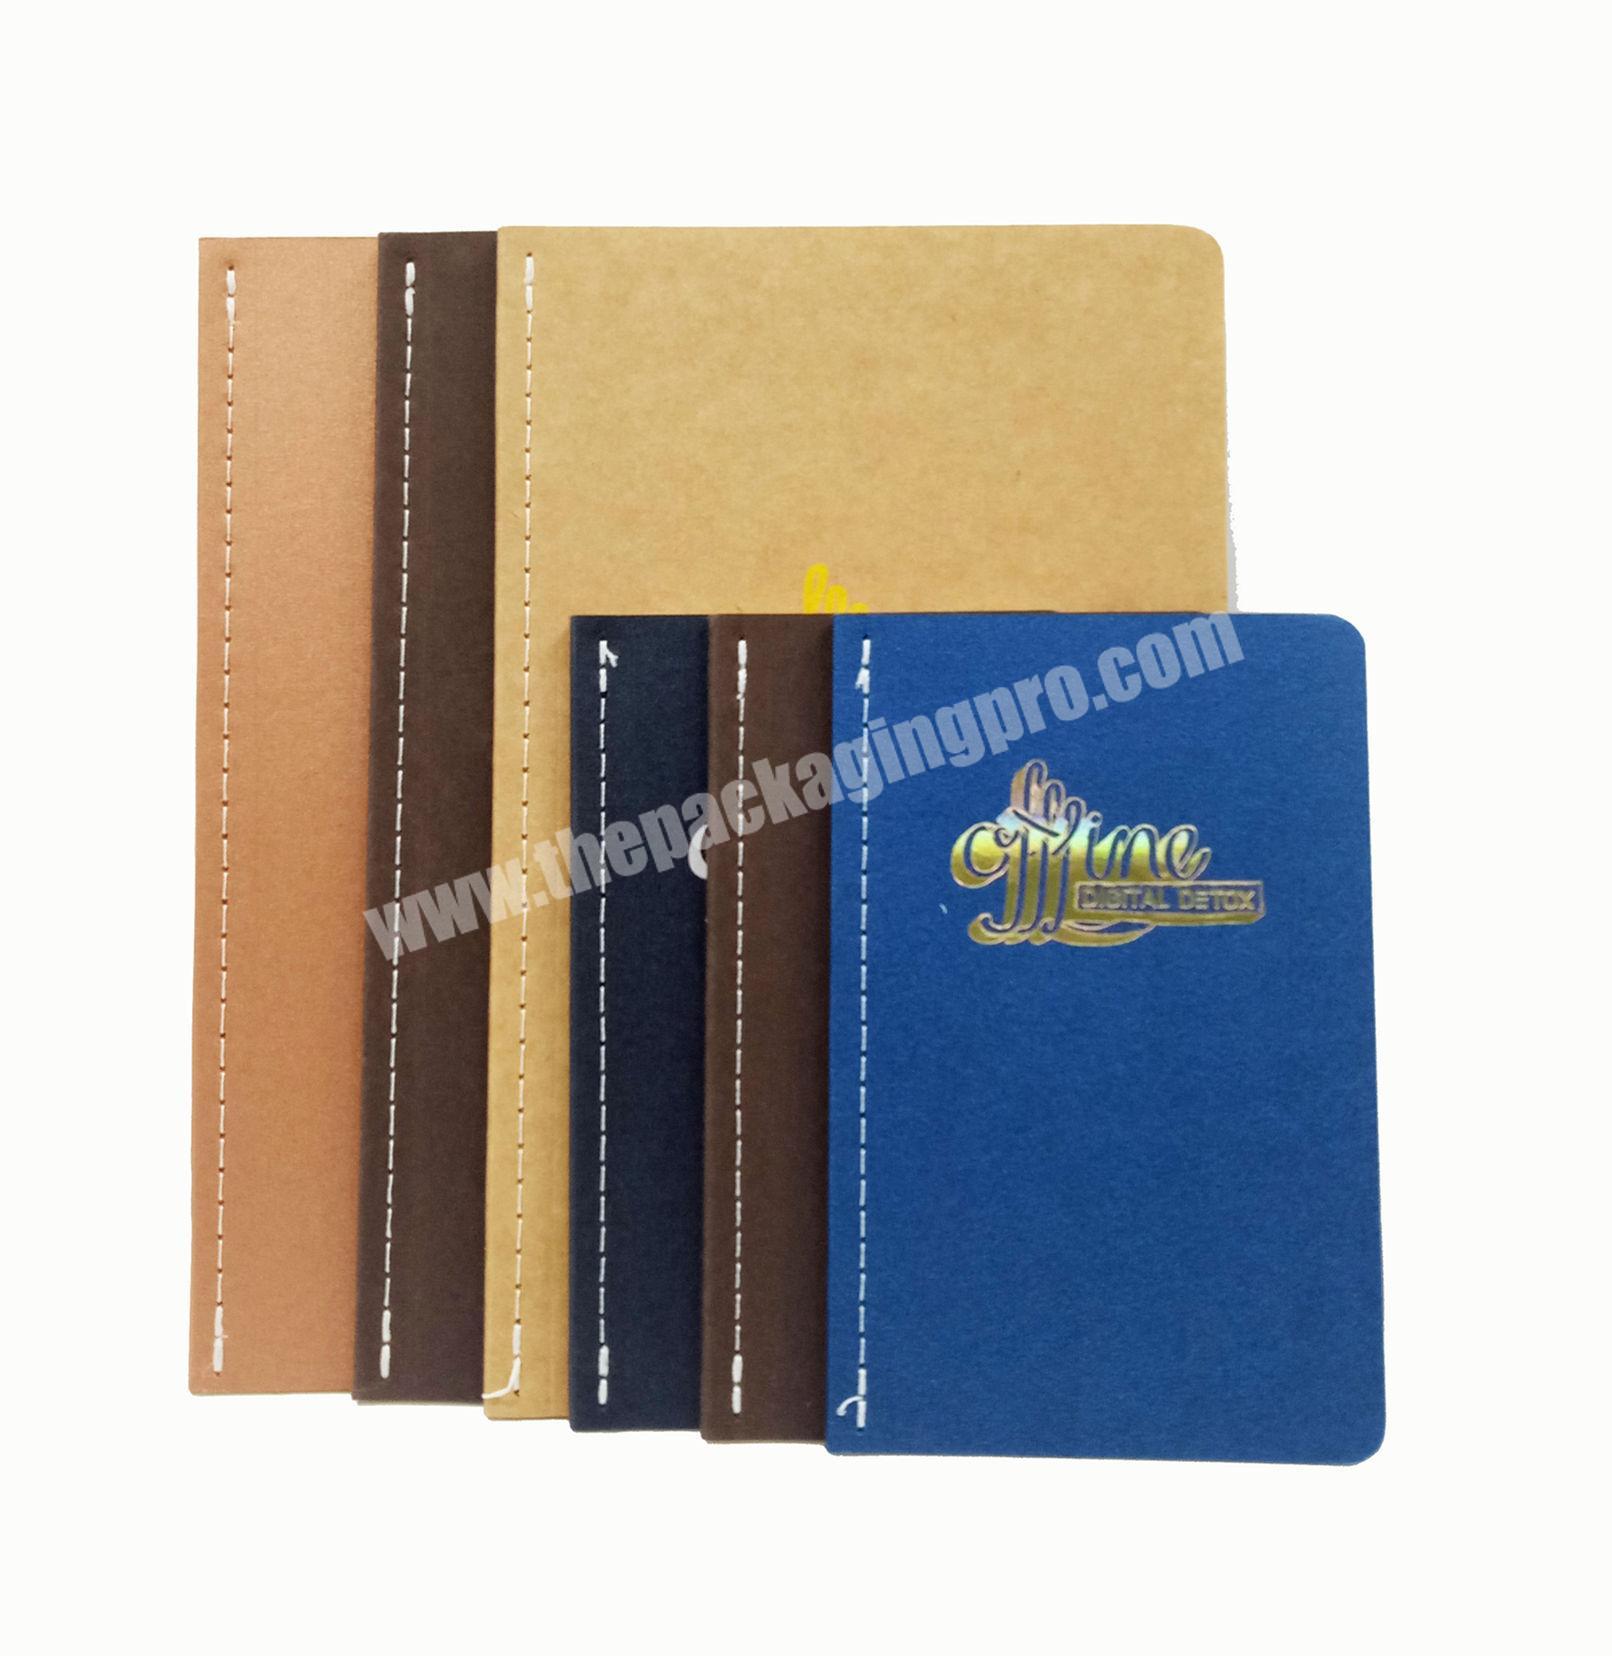 Hot salepaper notebook to do list planner kraft cover diary vintage journal